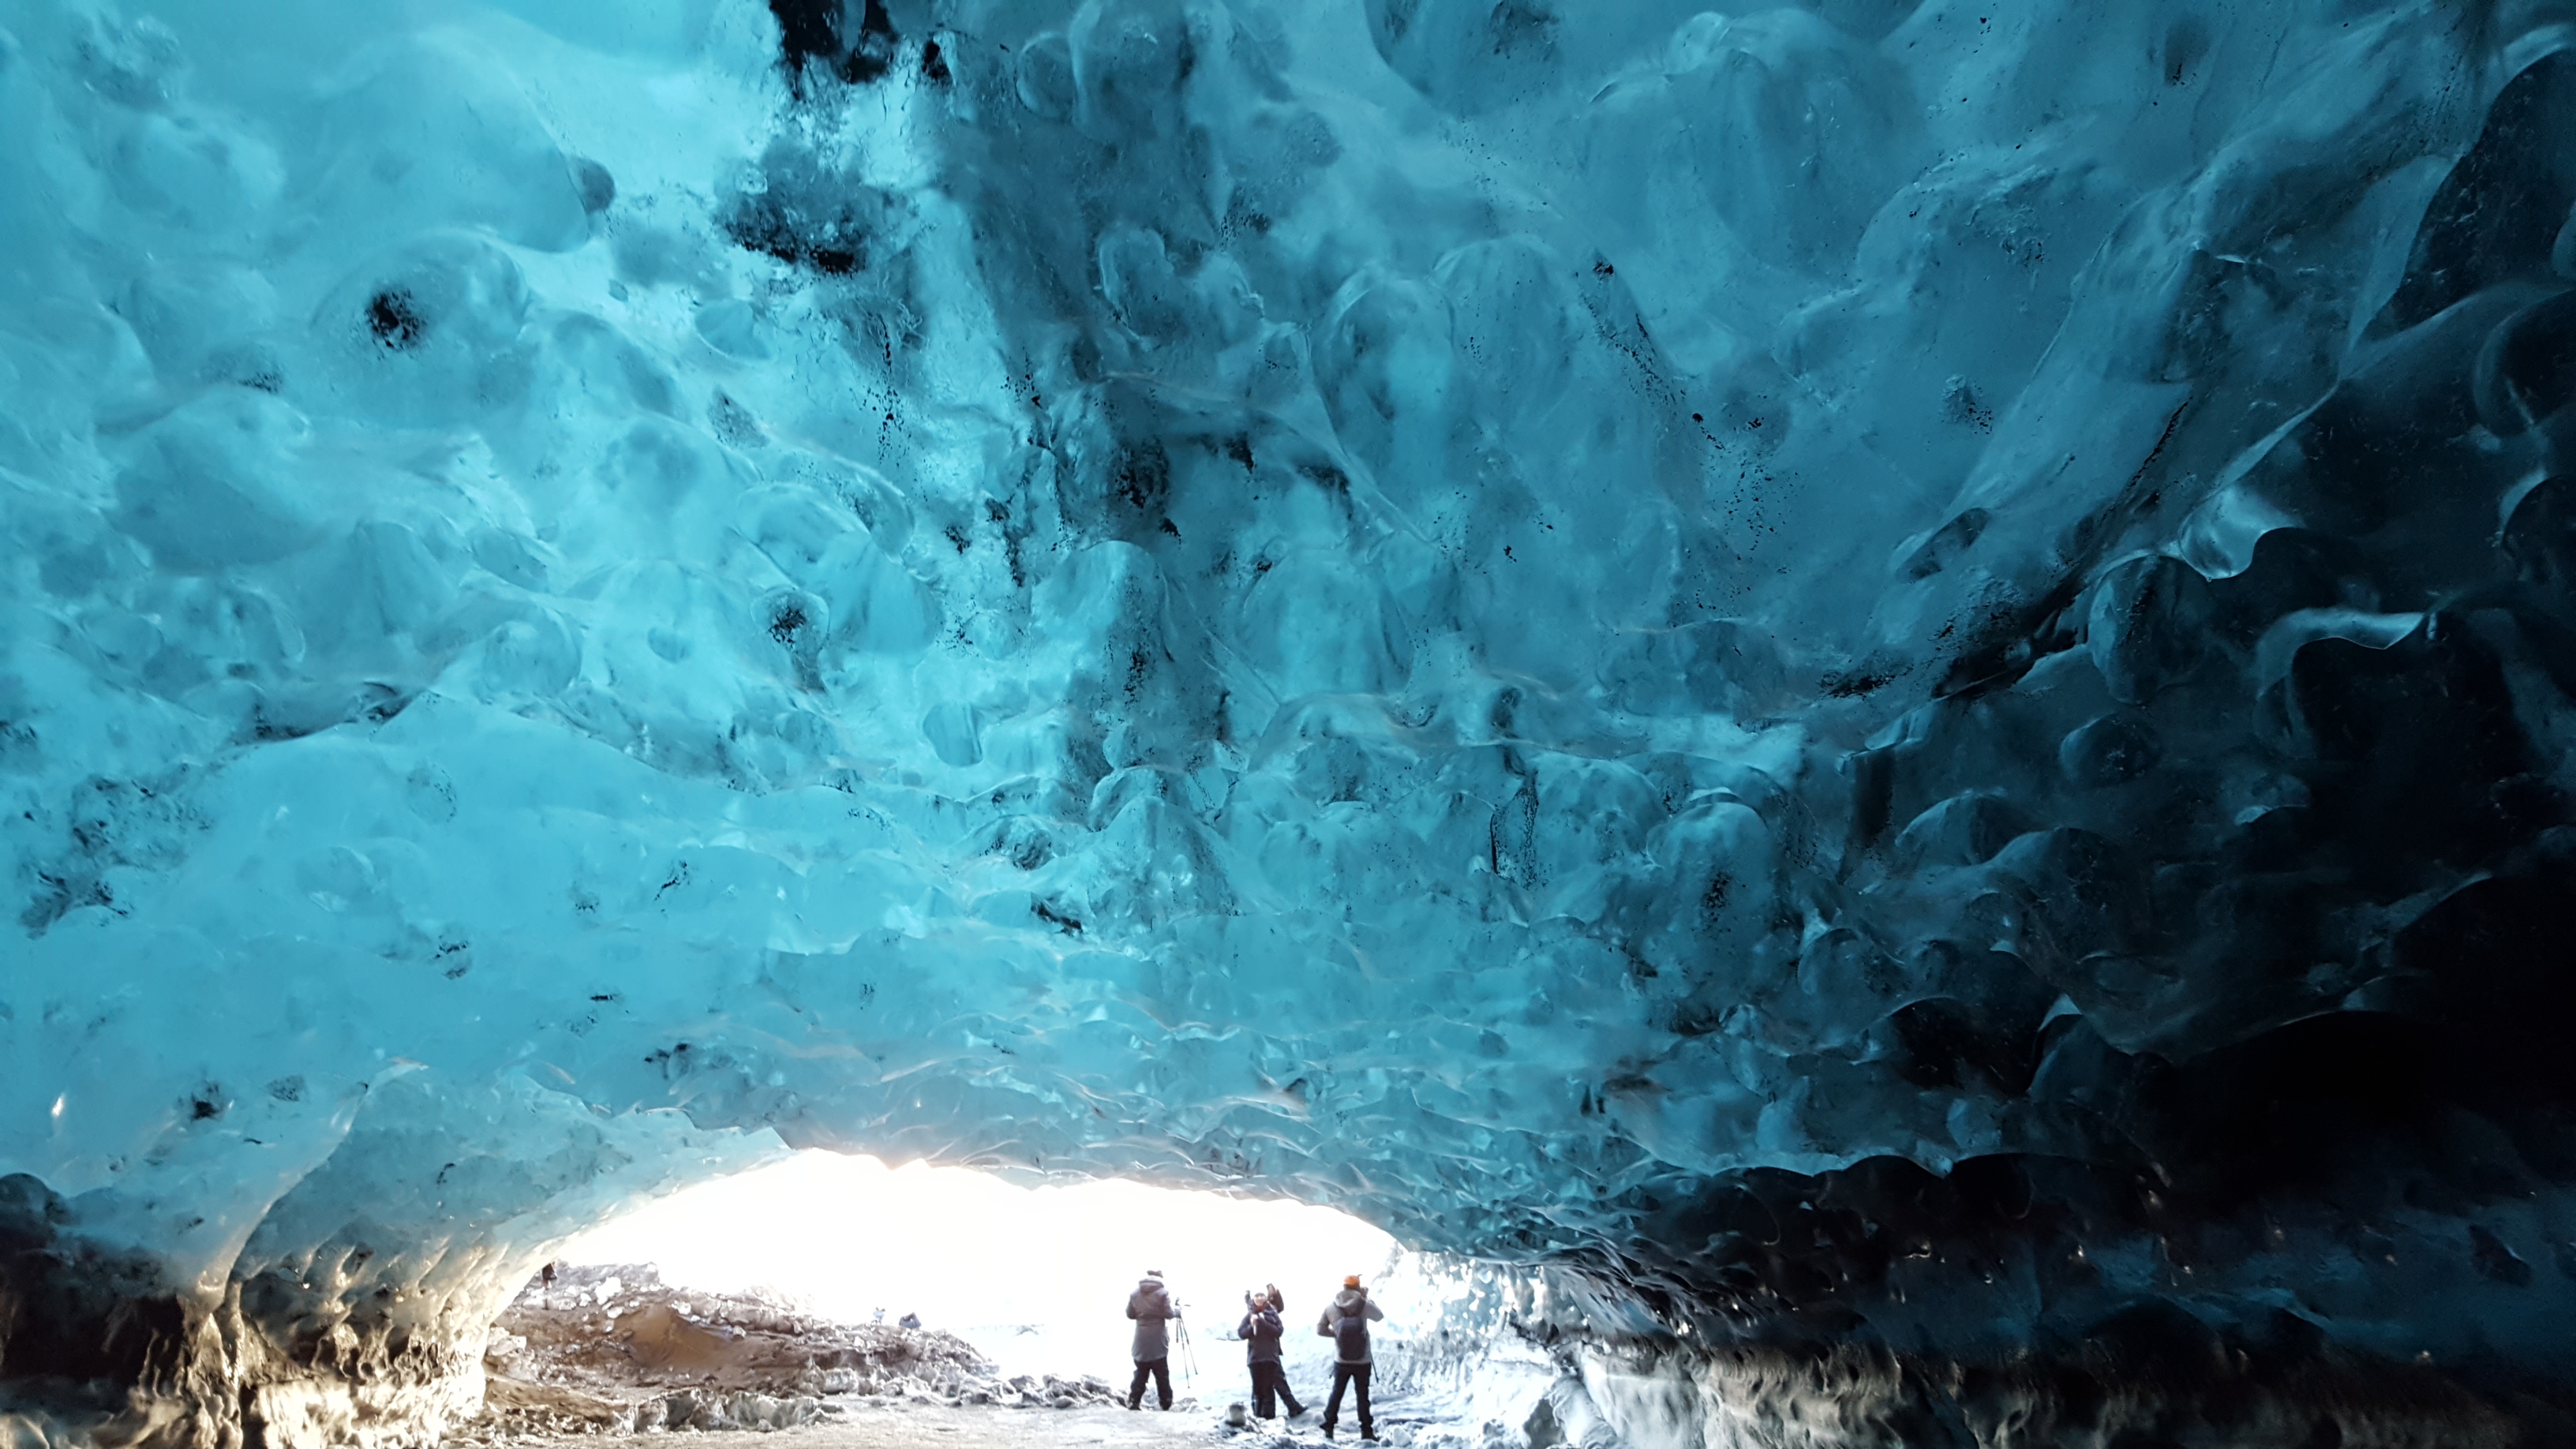 Vatnajokull Glacier Ice Cave Tour | Departure from Jokulsarlon